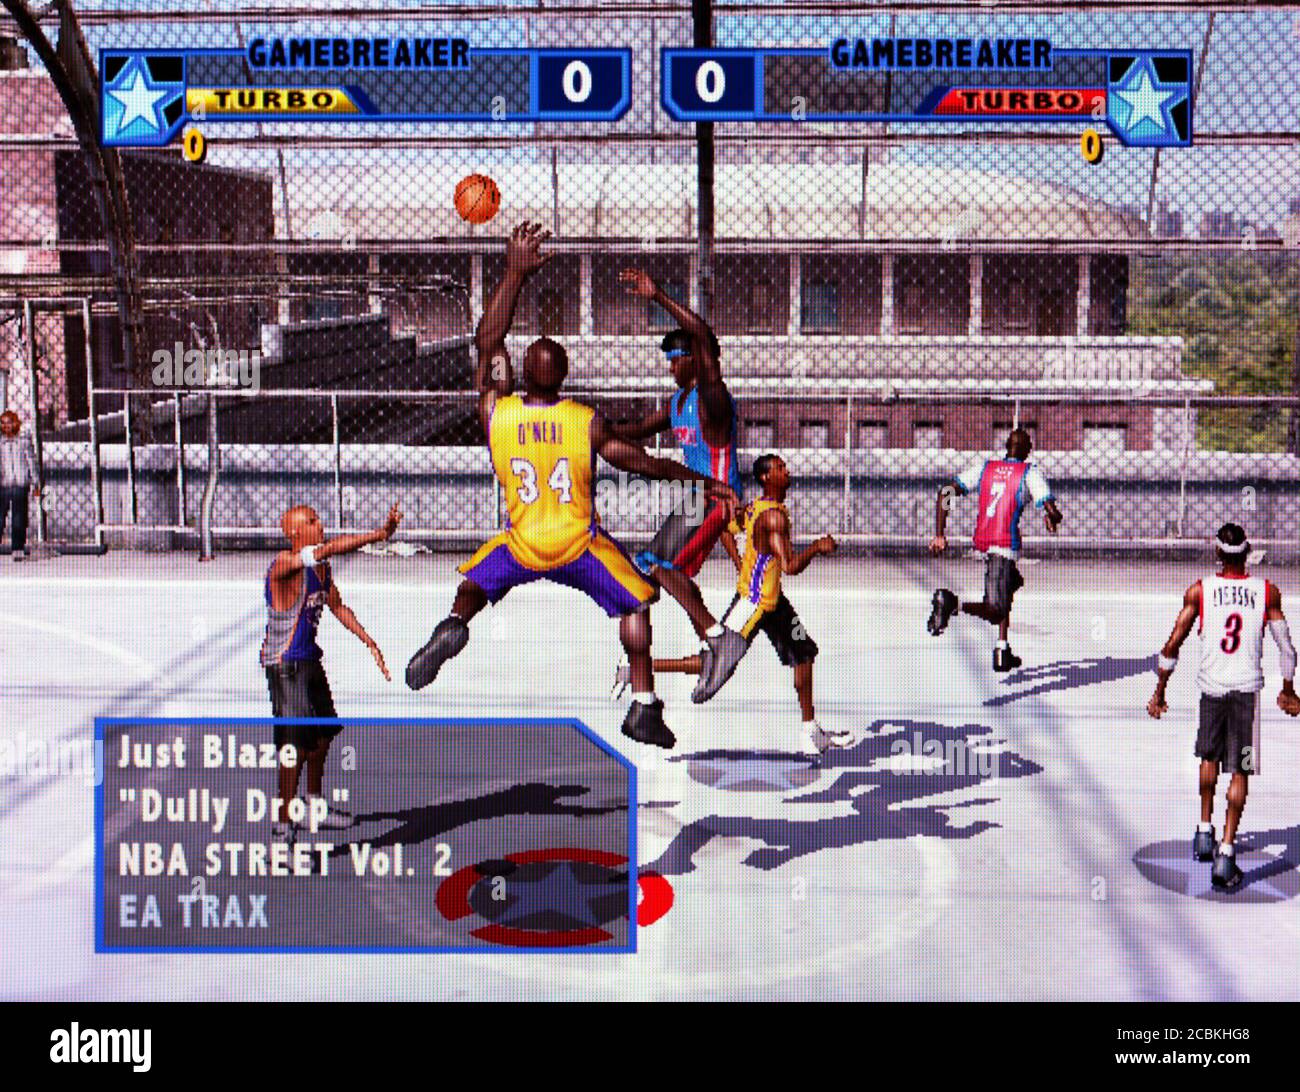 NBA Street Vol 2 - Nintendo Gamecube Videogame - Editorial use only Stock Photo